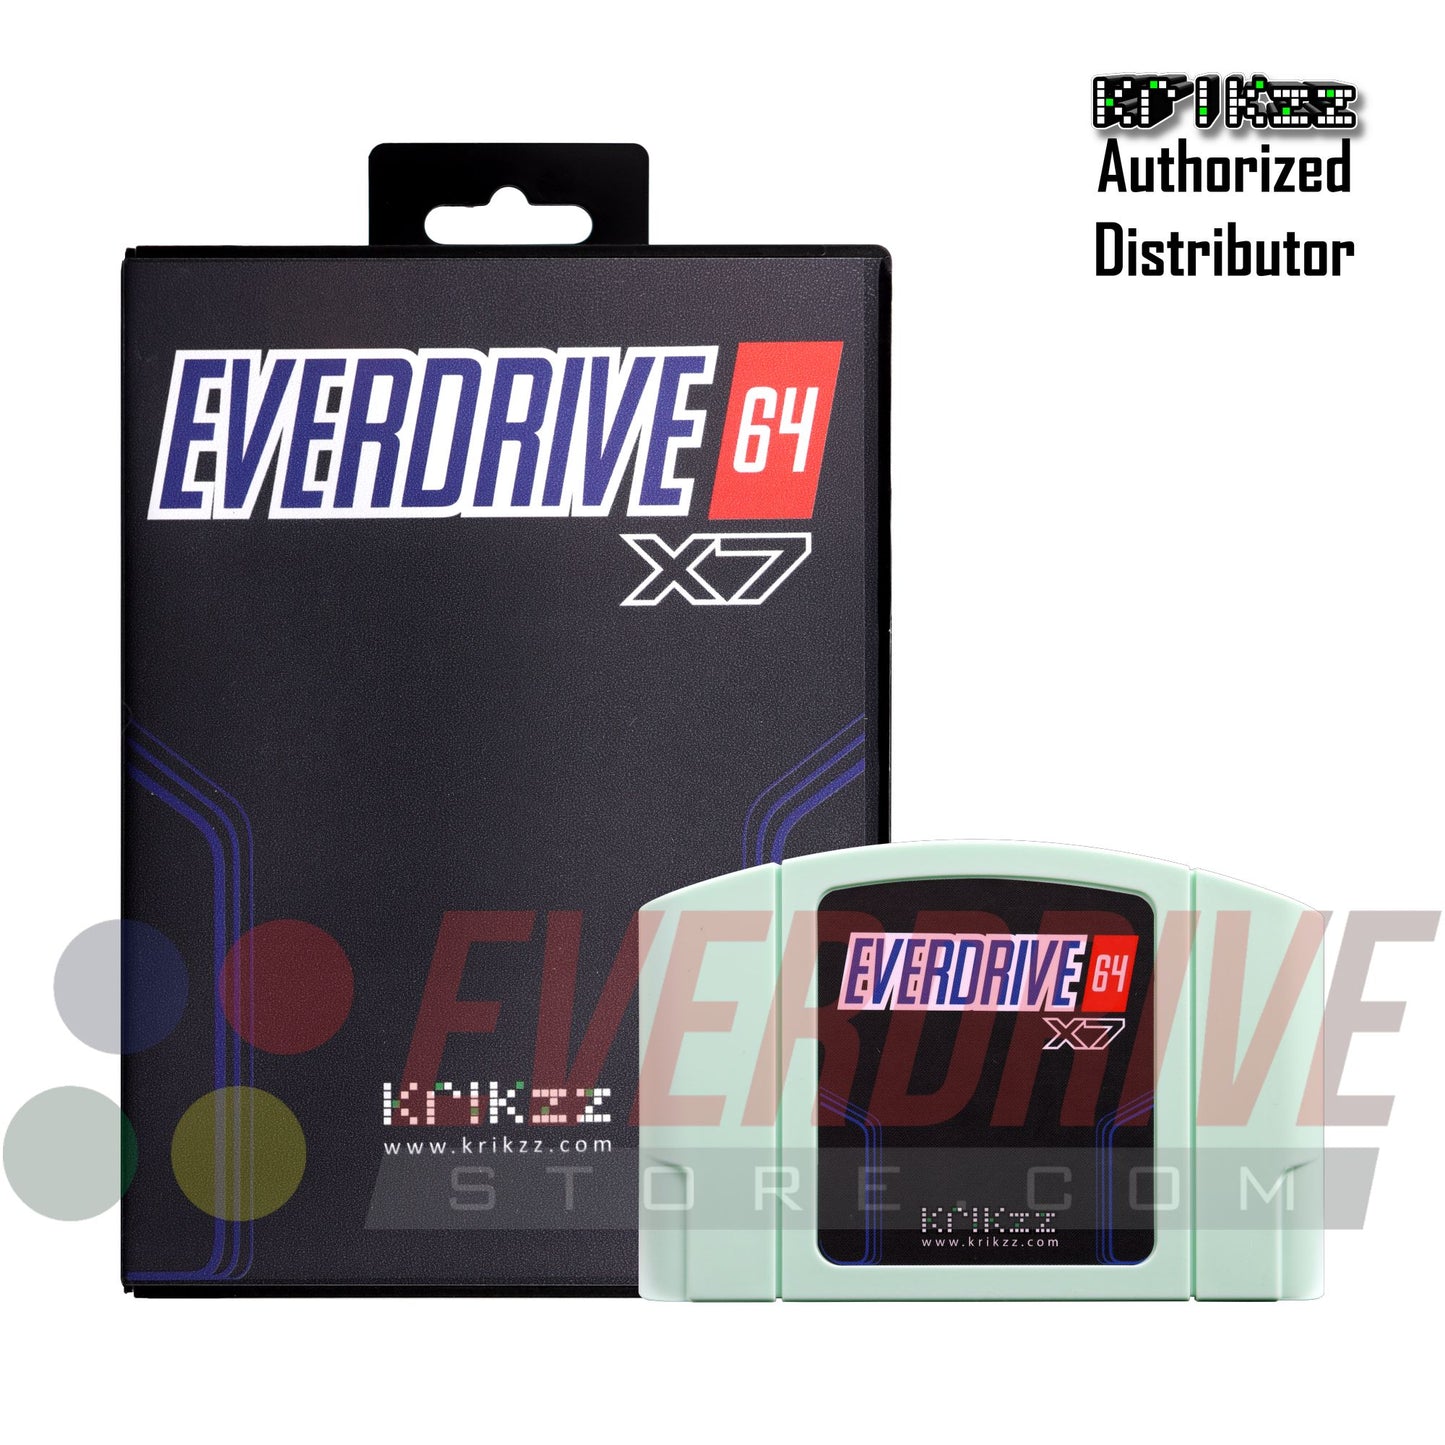 Everdrive 64 X7 - Mint